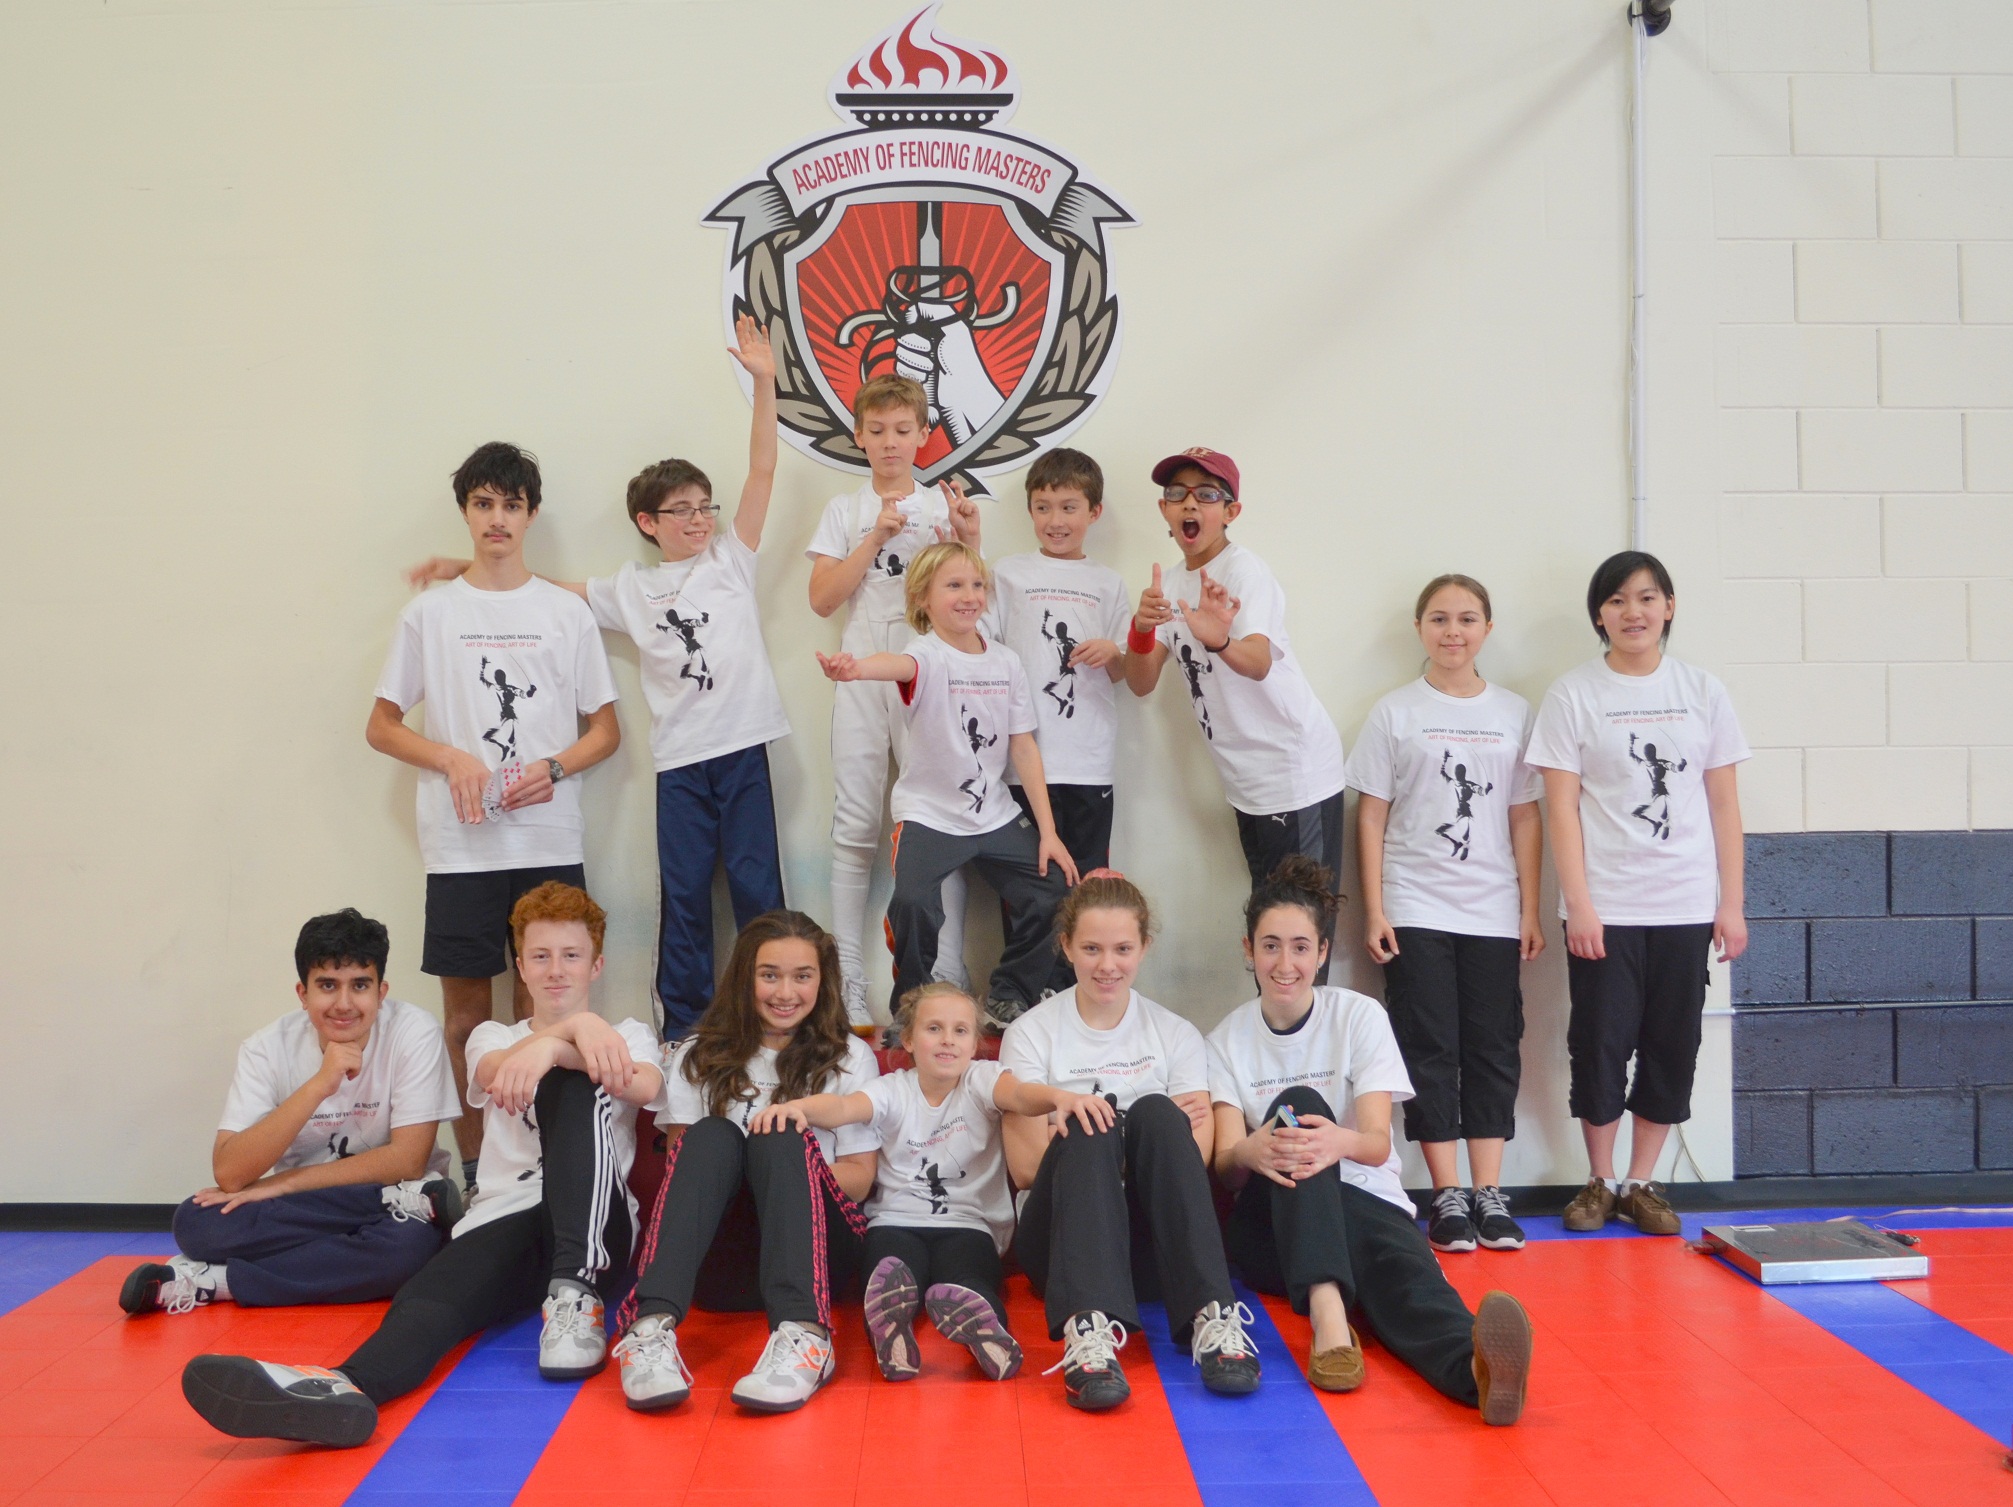 Academy of Fencing Masters Fencing Camp